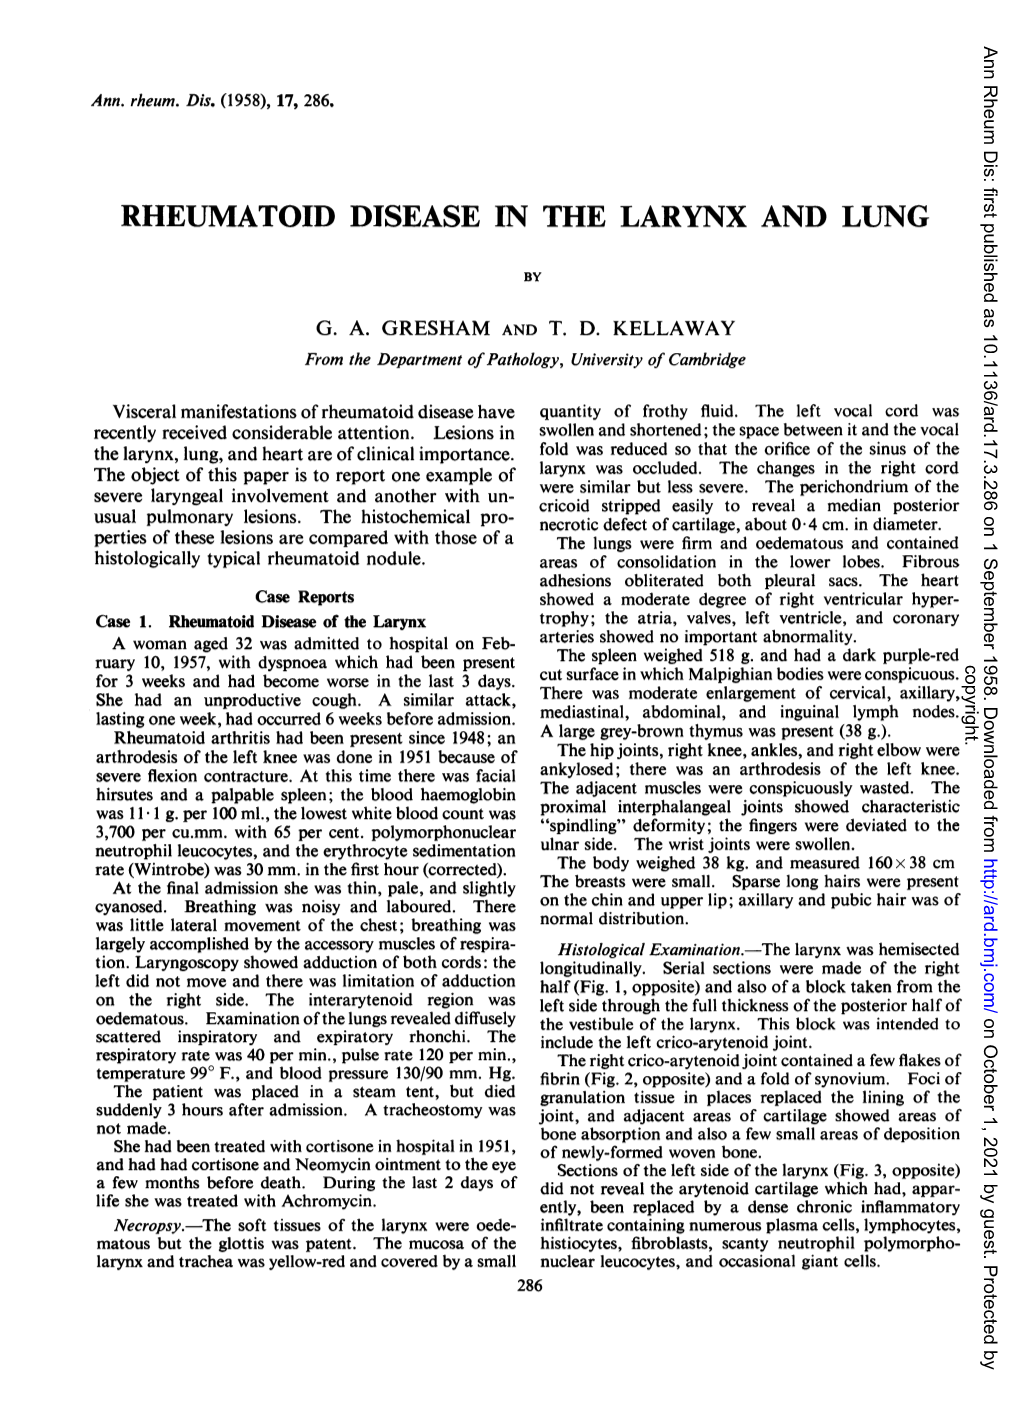 Rheumatoid Disease in the Larynx and Lung